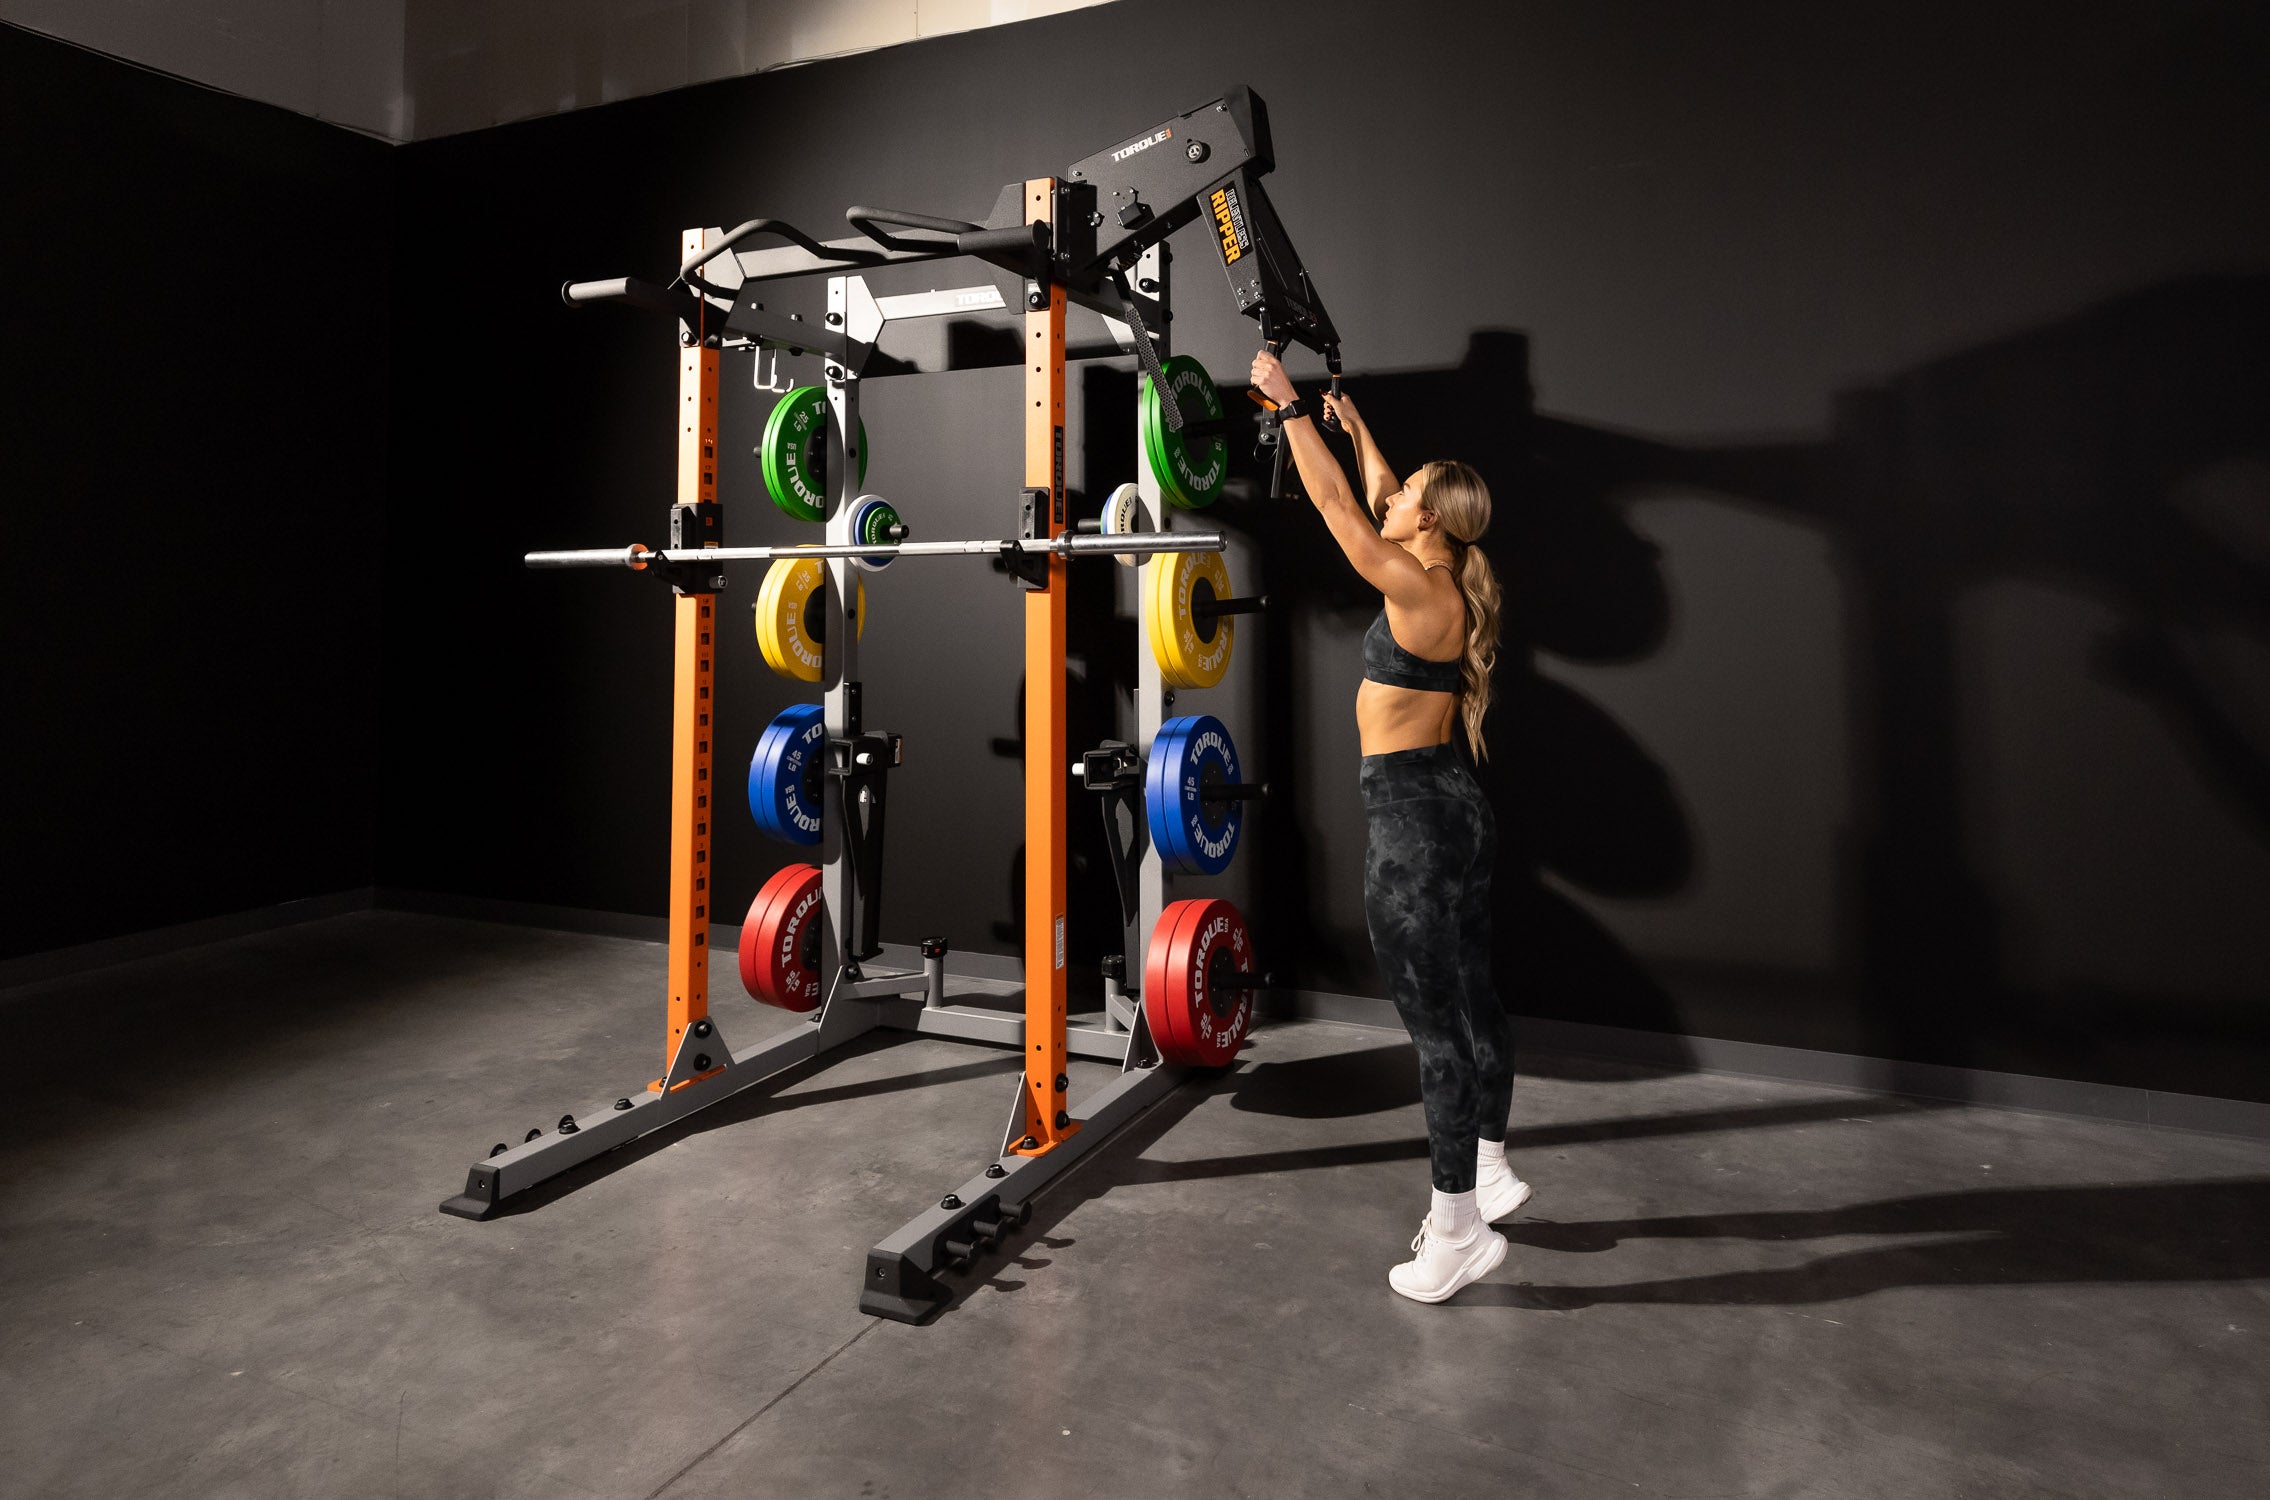 Hoist Fitness Commercial Grade Mi1 Functional Trainer Home Gym - Fitness  Market